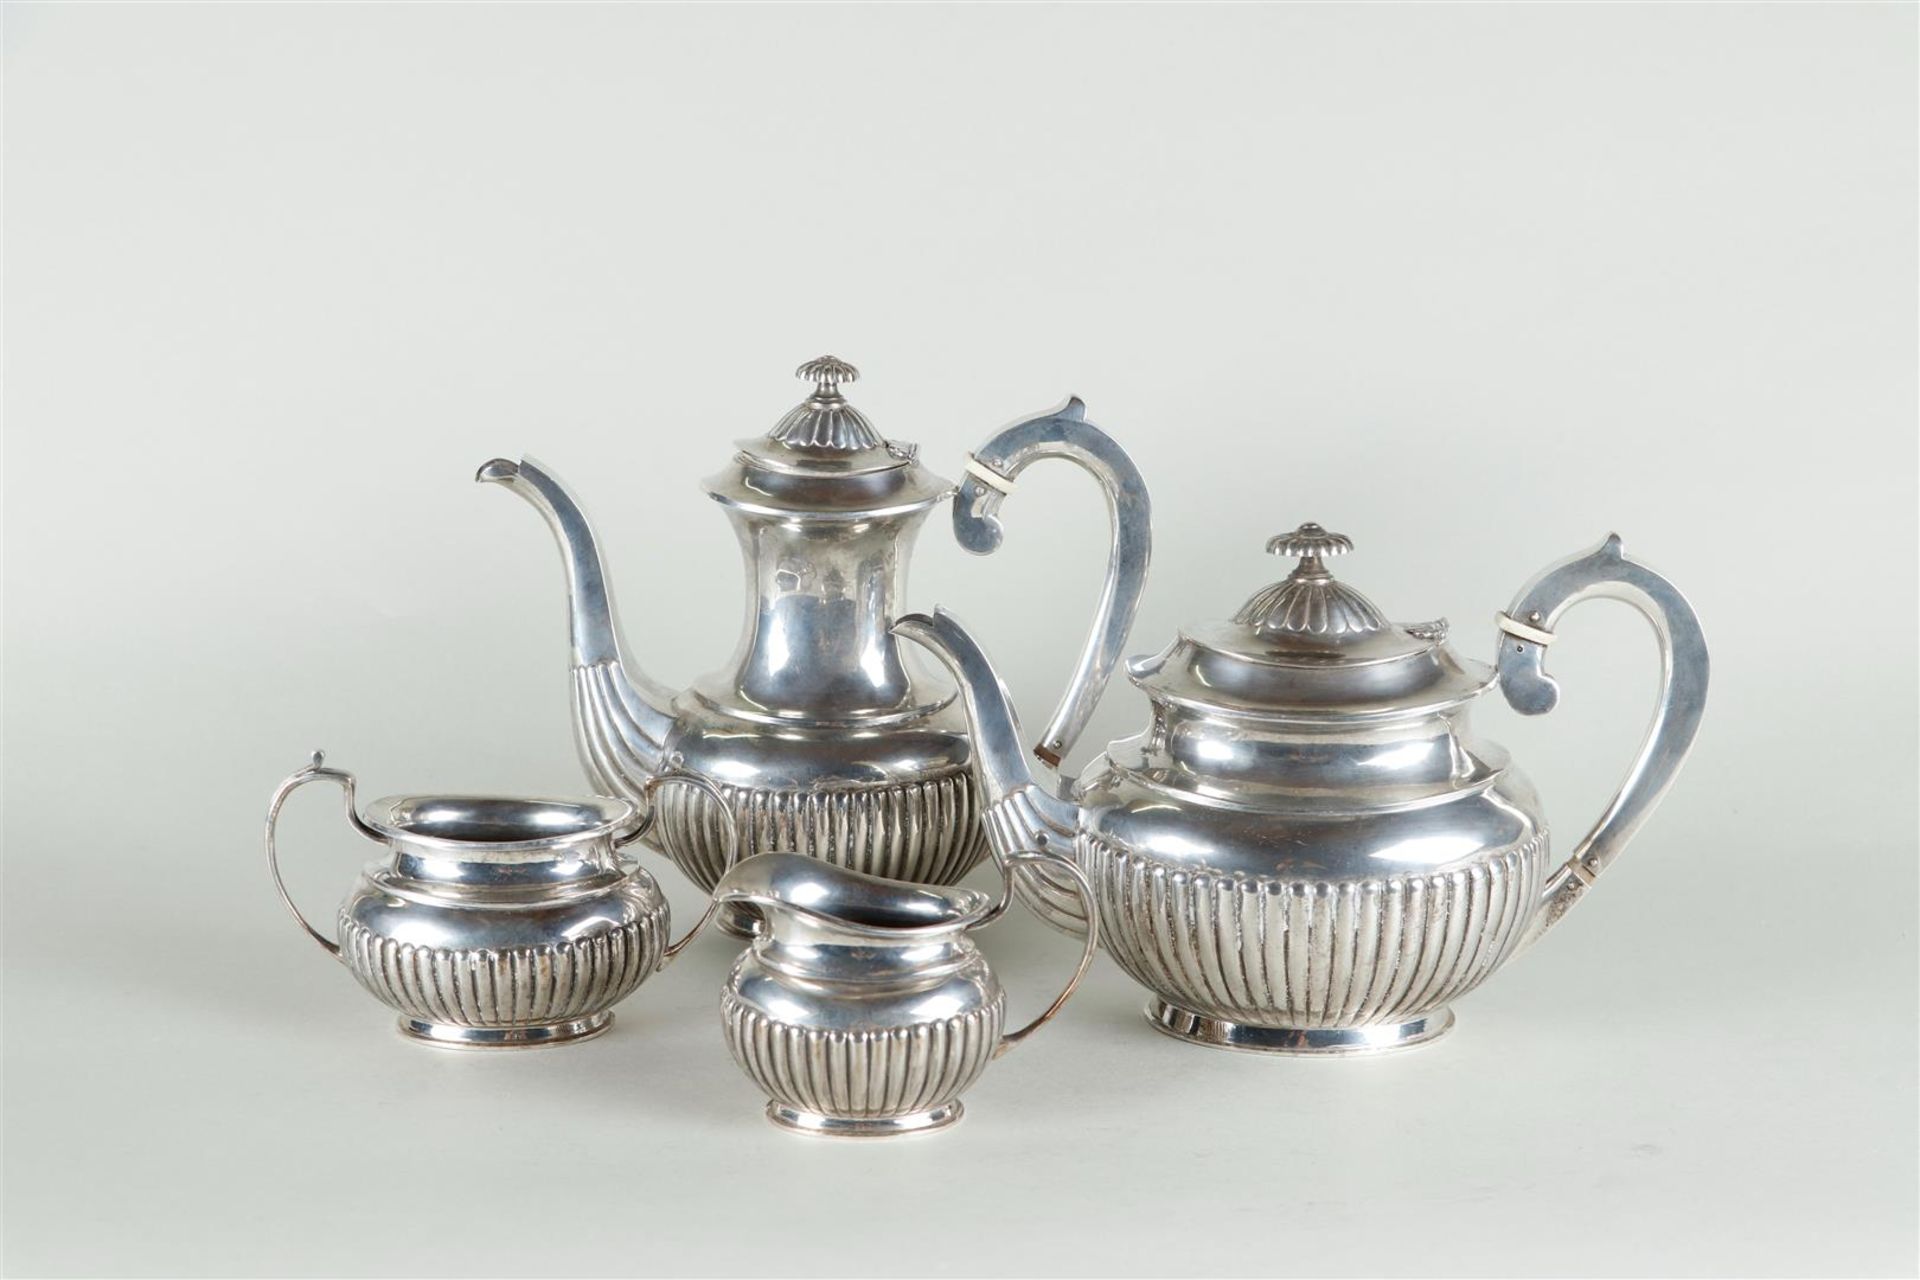 A silver coffee and tea set, consisting of a coffee pot, a teapot, a cream jug and a sugar bowl. Mar